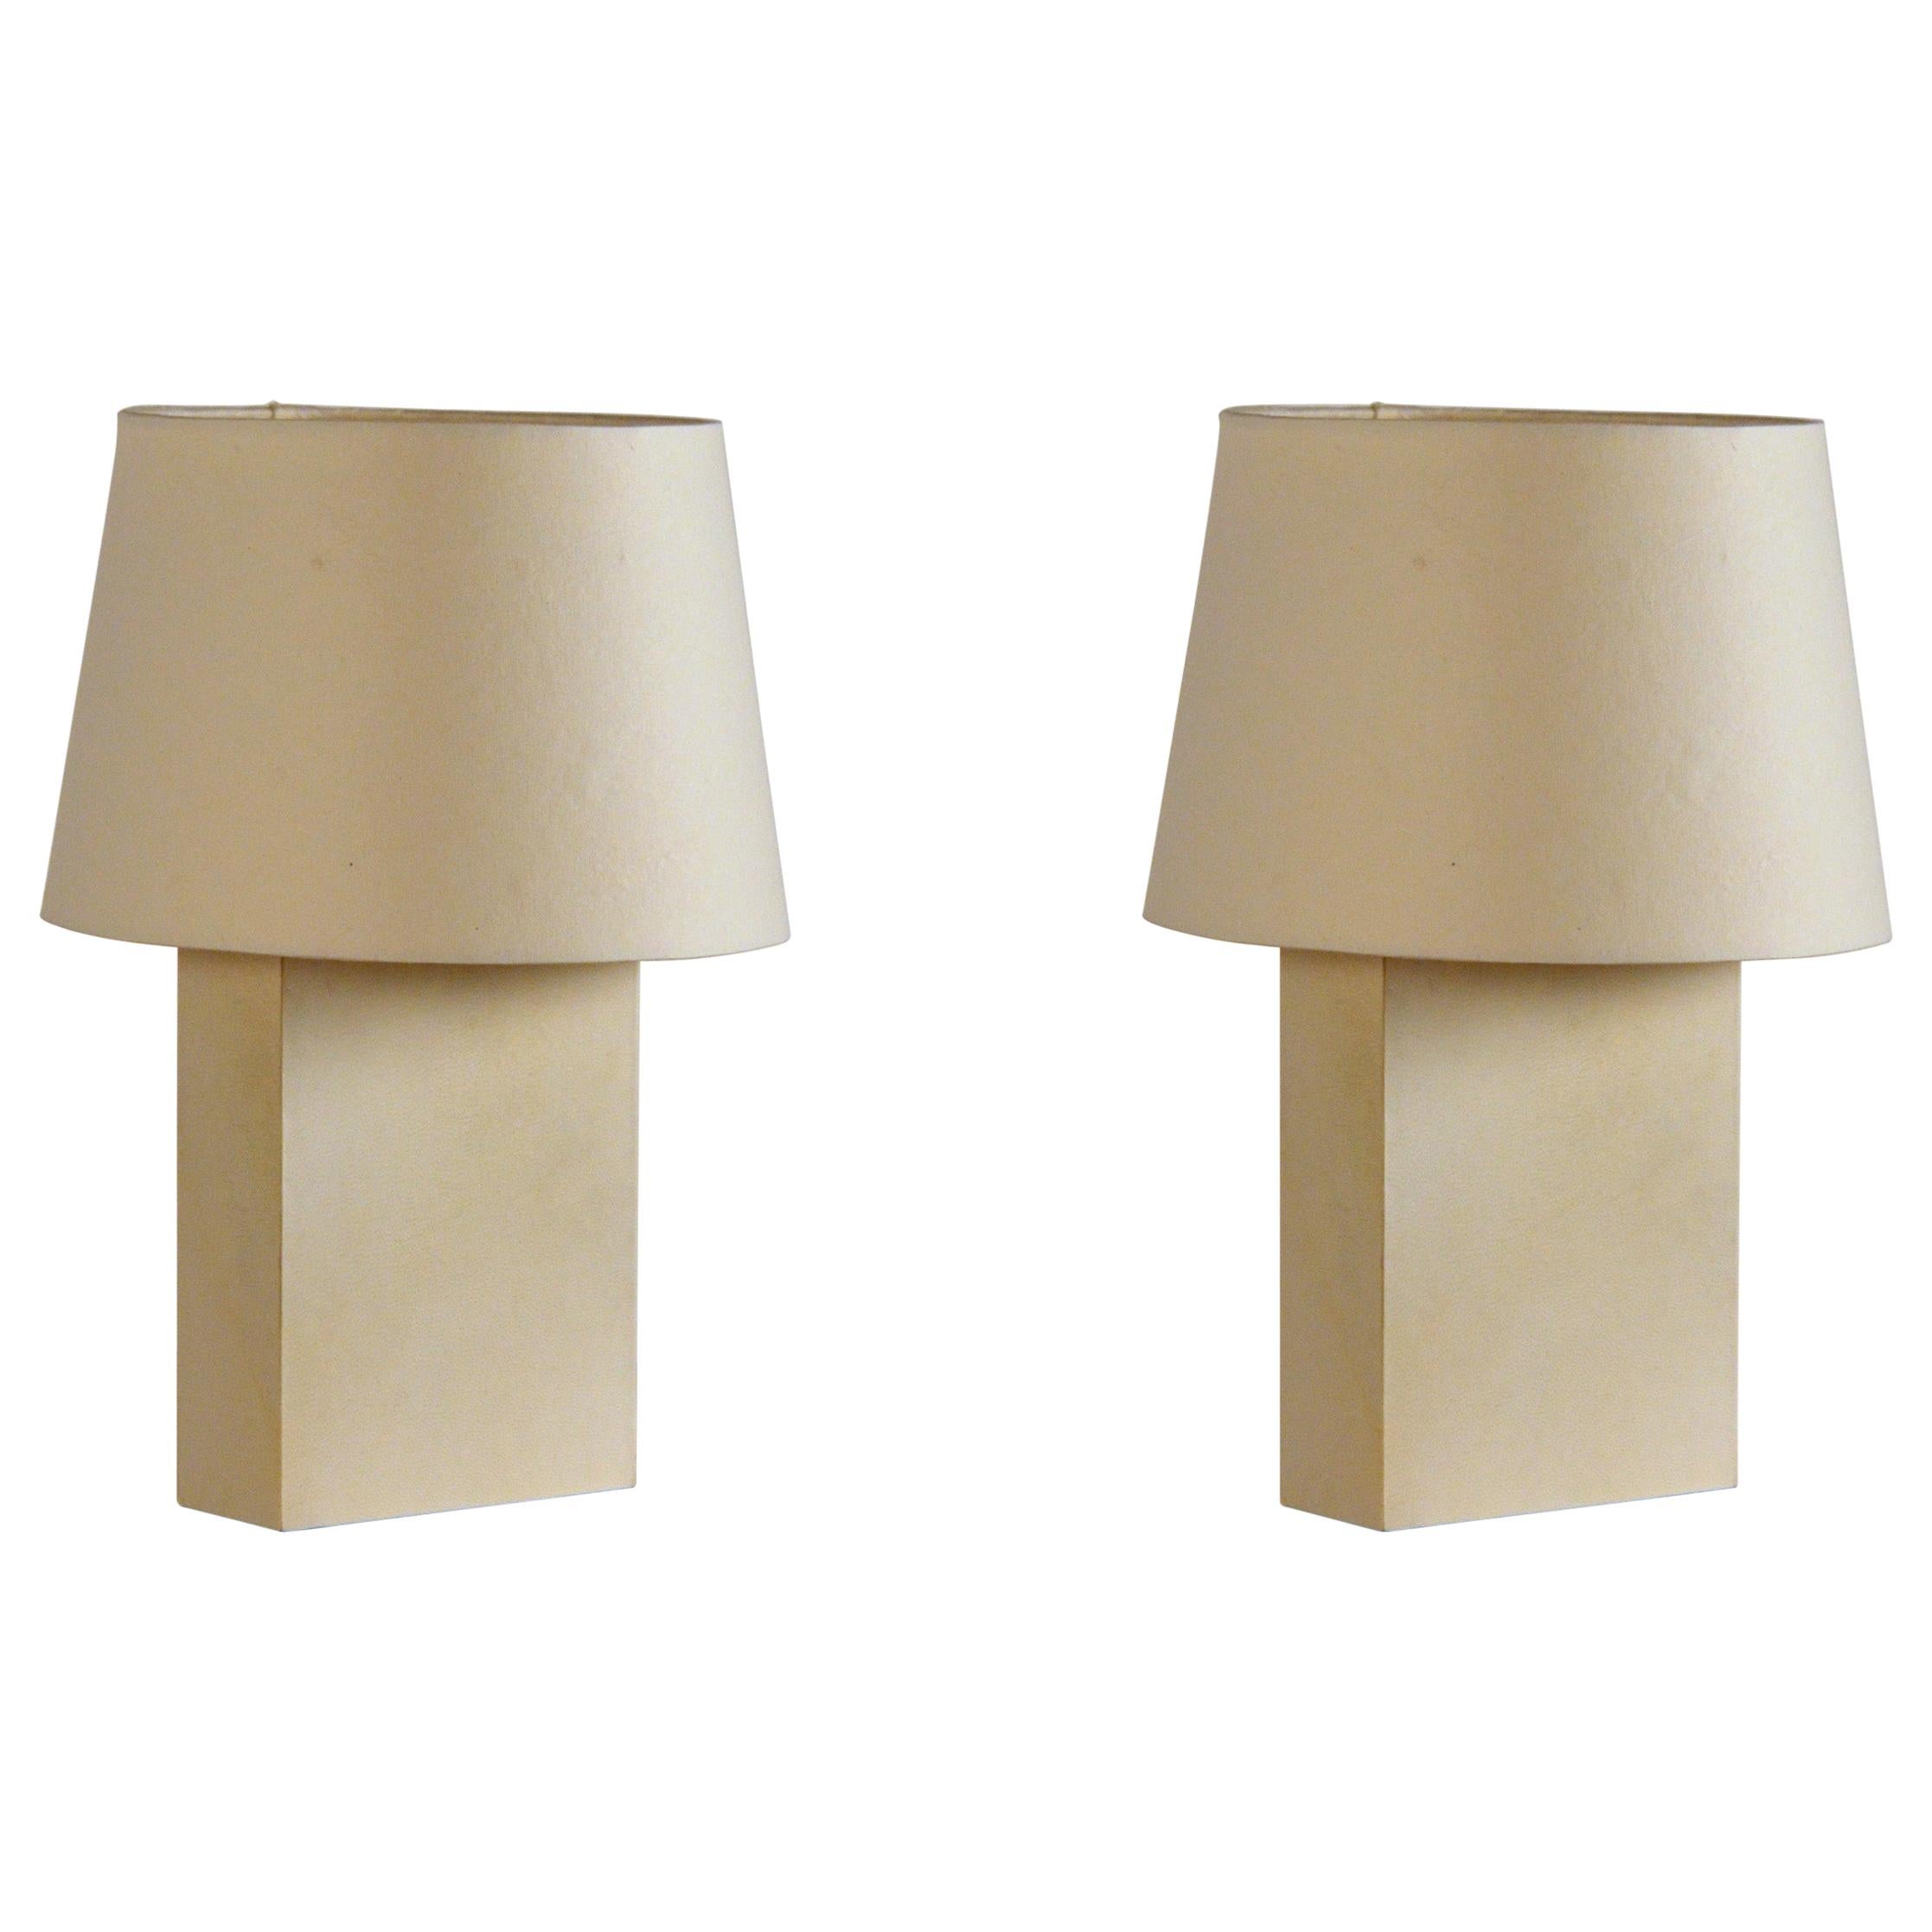 Pair of 'Bloc' Parchment Lamps with Parchment Paper Shades by Design Frères For Sale